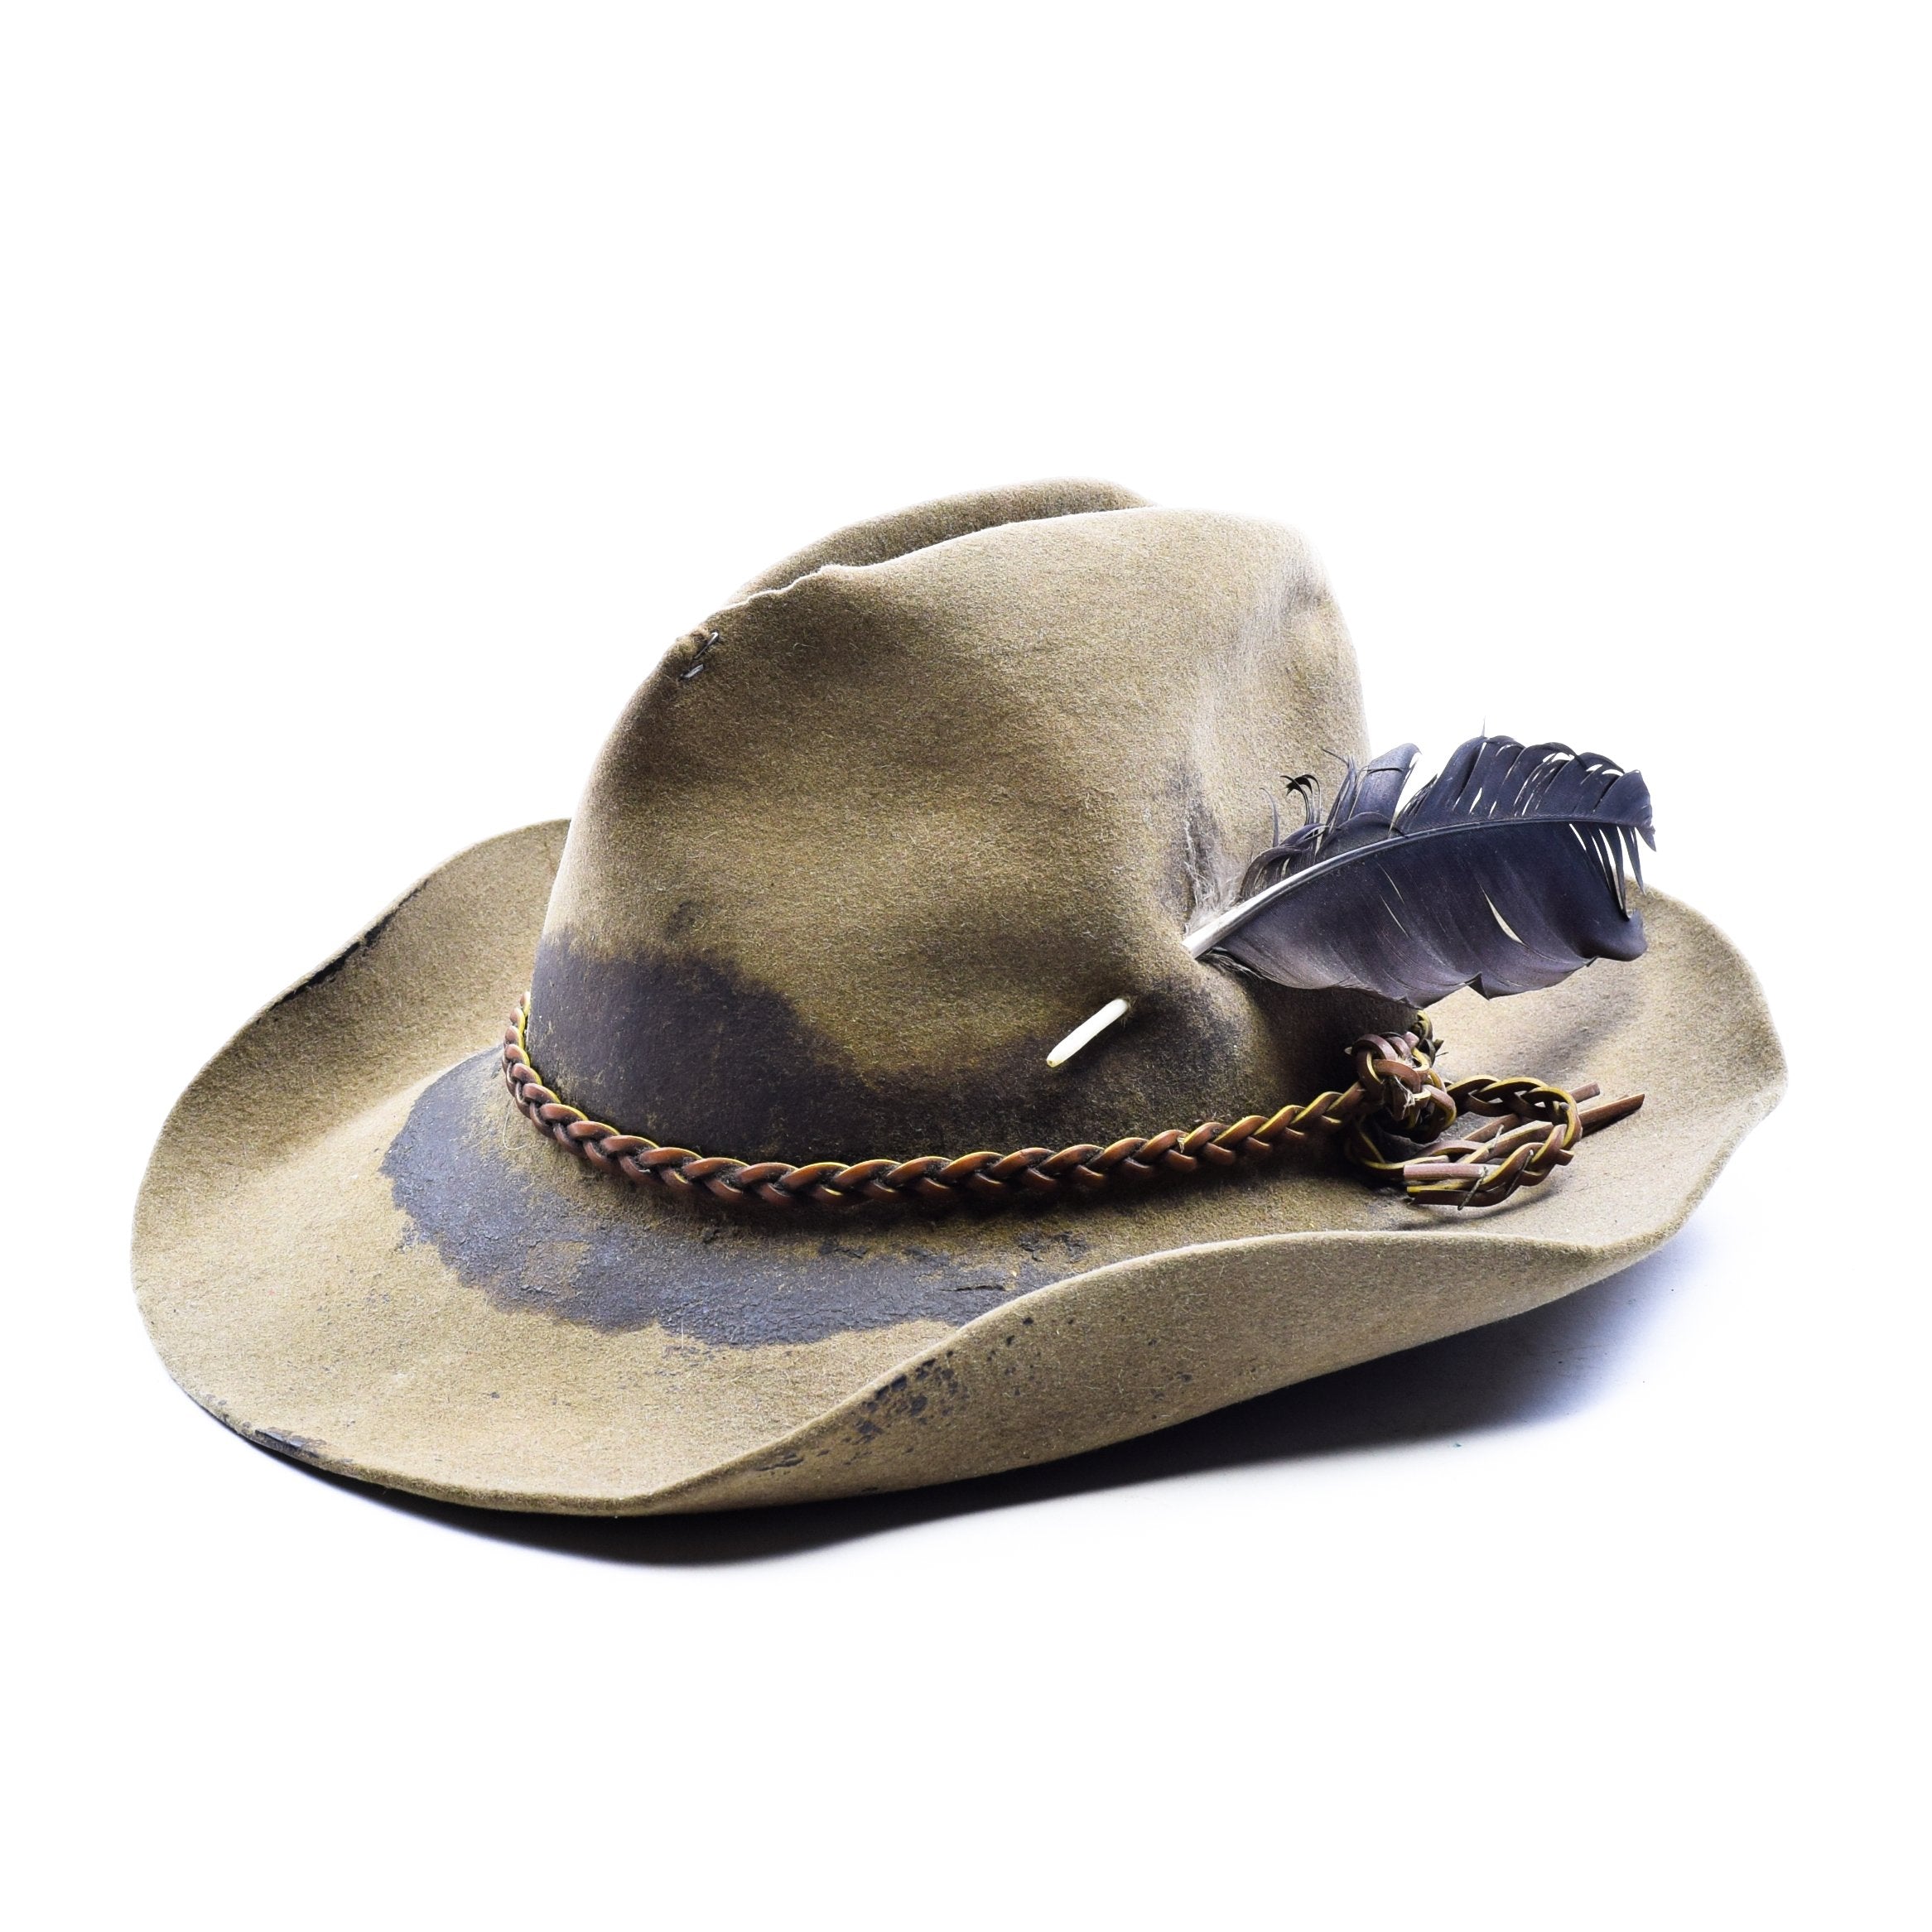 Old Cowboy Hat